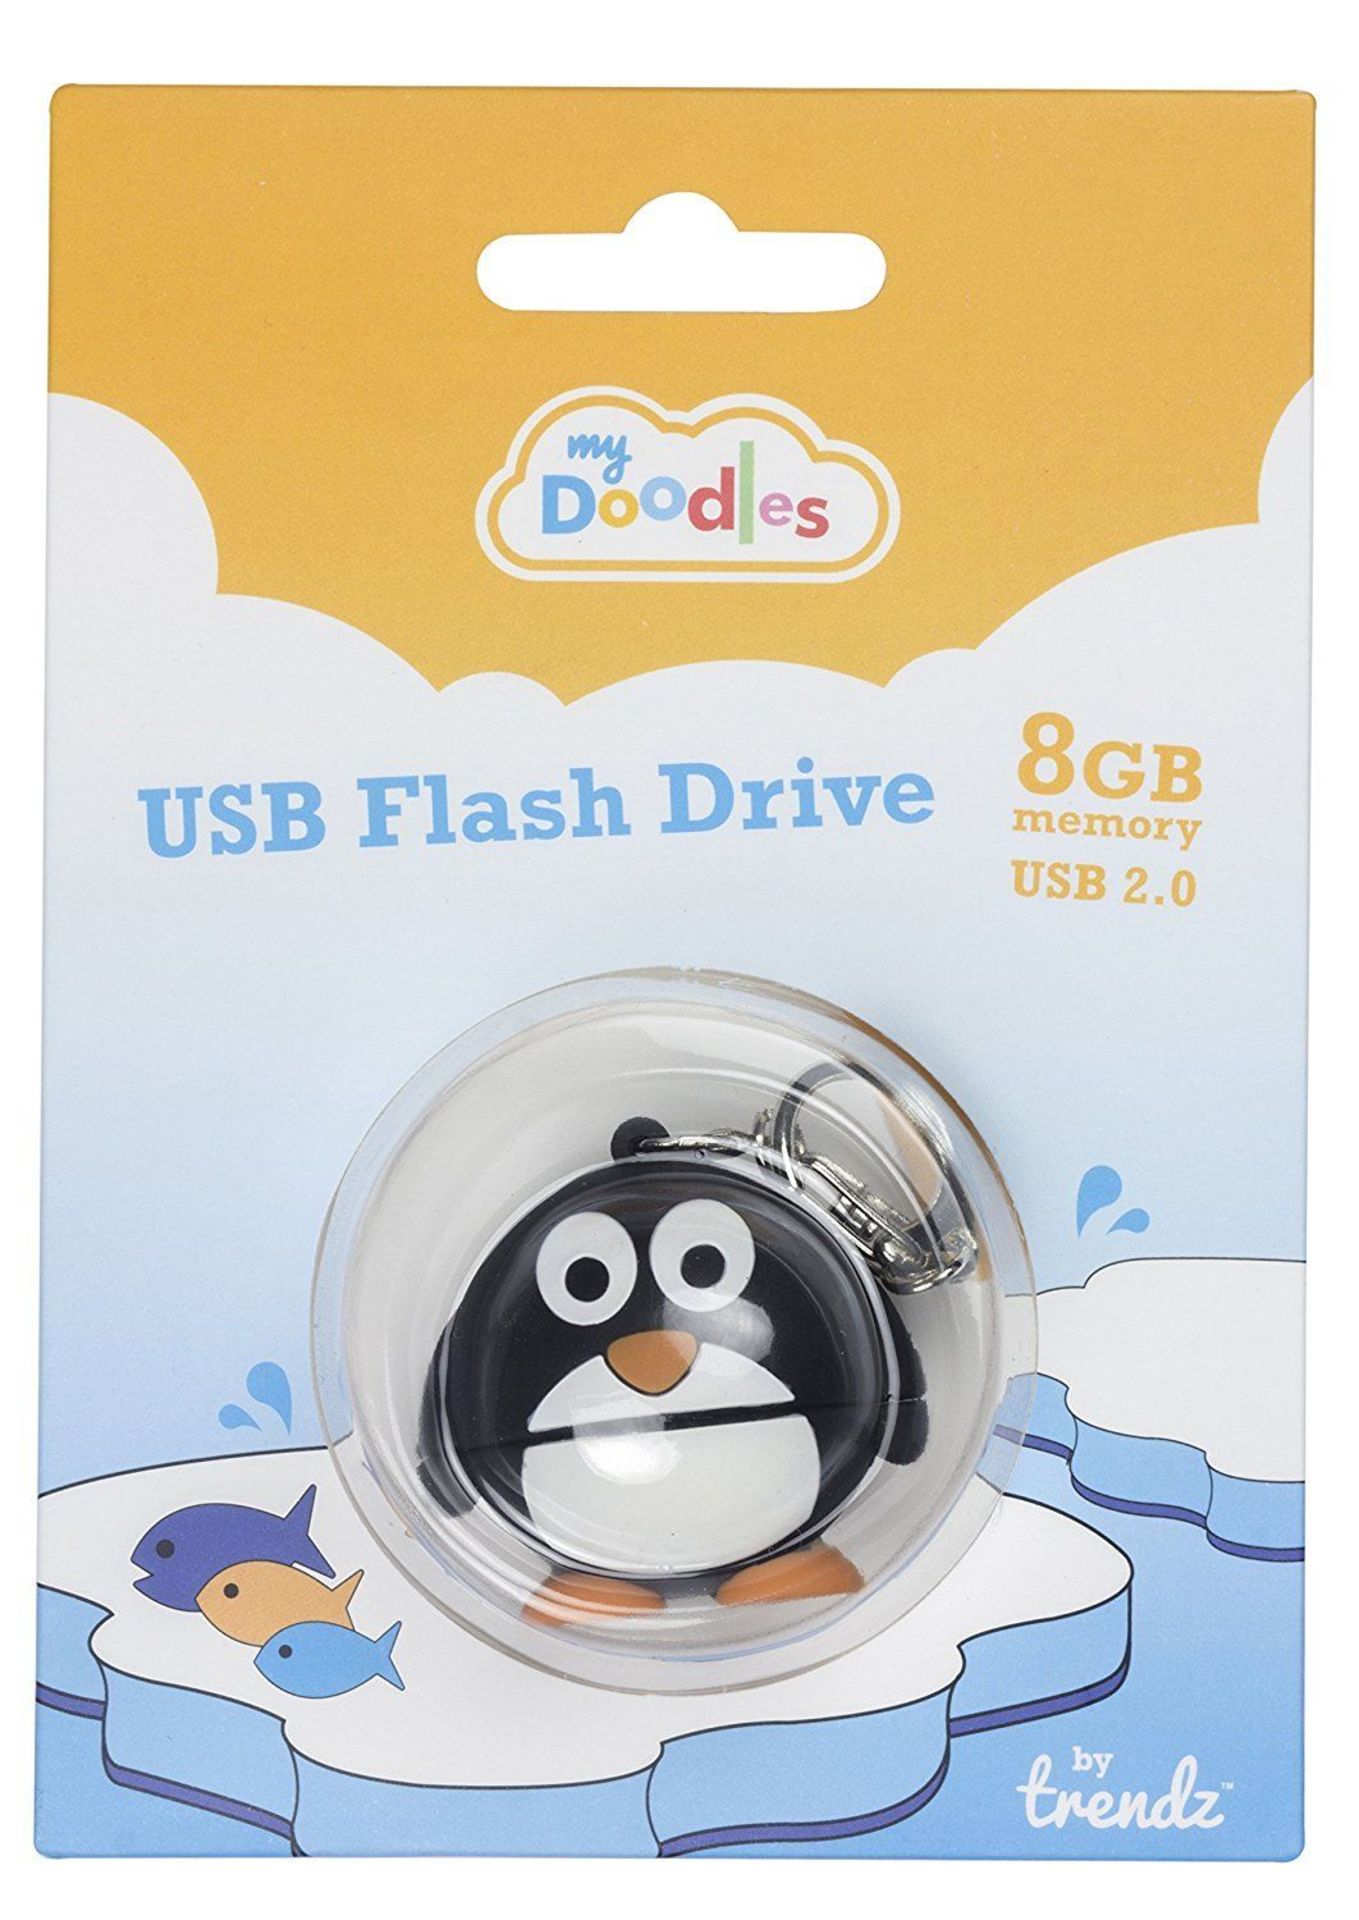 V *TRADE QTY* Brand New My Doodles 8GB Penguin USB Flashdrive - Ebay Price £19.92 X 6 YOUR BID PRICE - Image 2 of 2